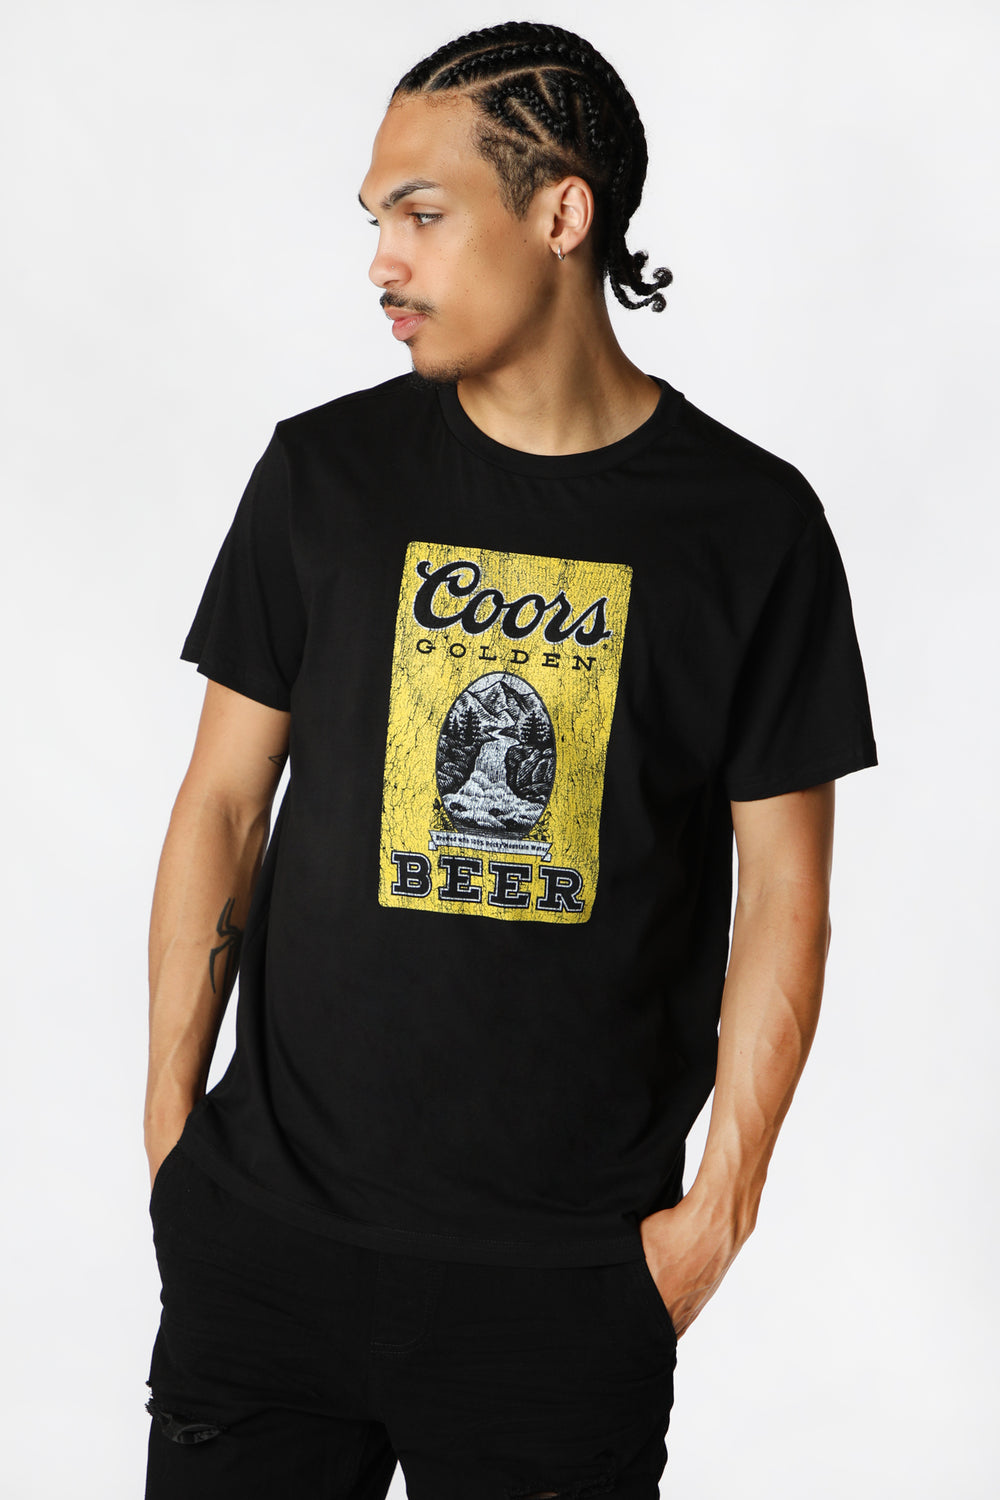 T-Shirt Imprimé Coors Golden Beer Homme Noir